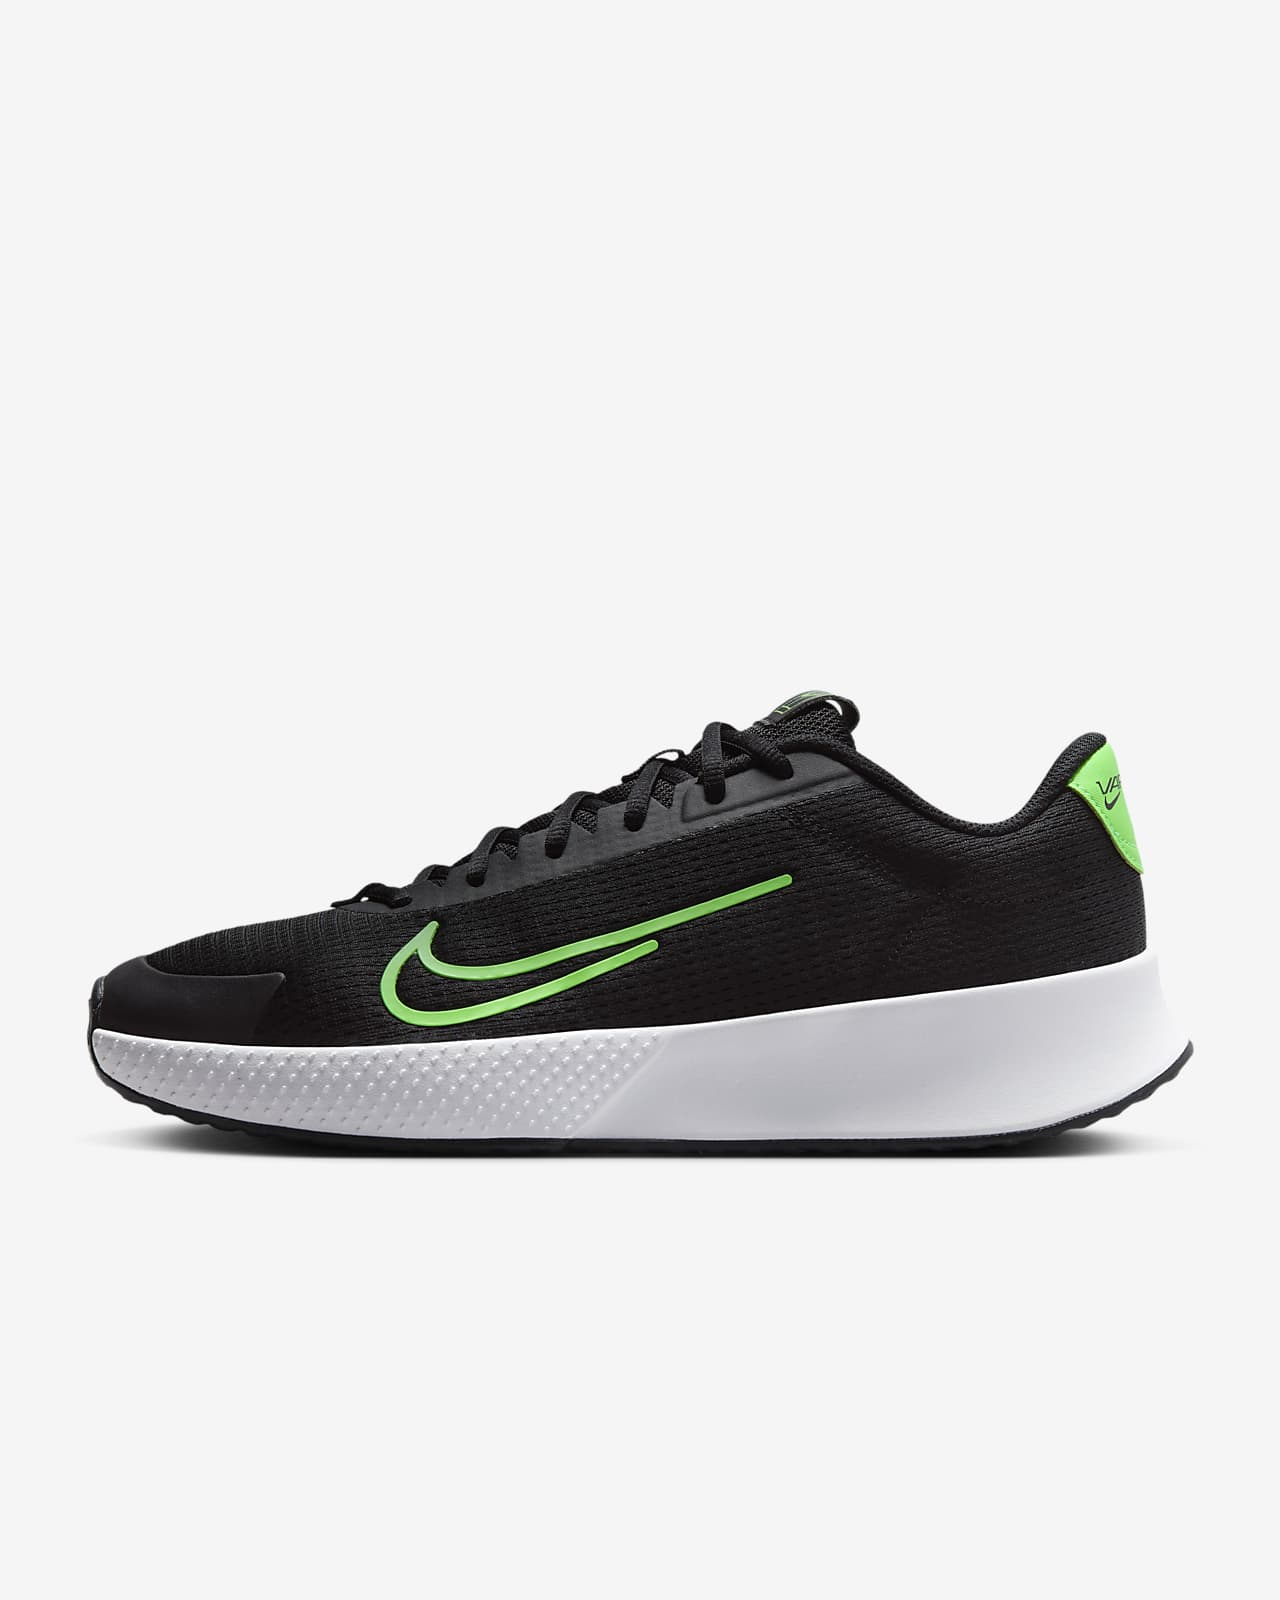 NikeCourt Vapor Lite 2 Men's Hard Court Tennis Shoes